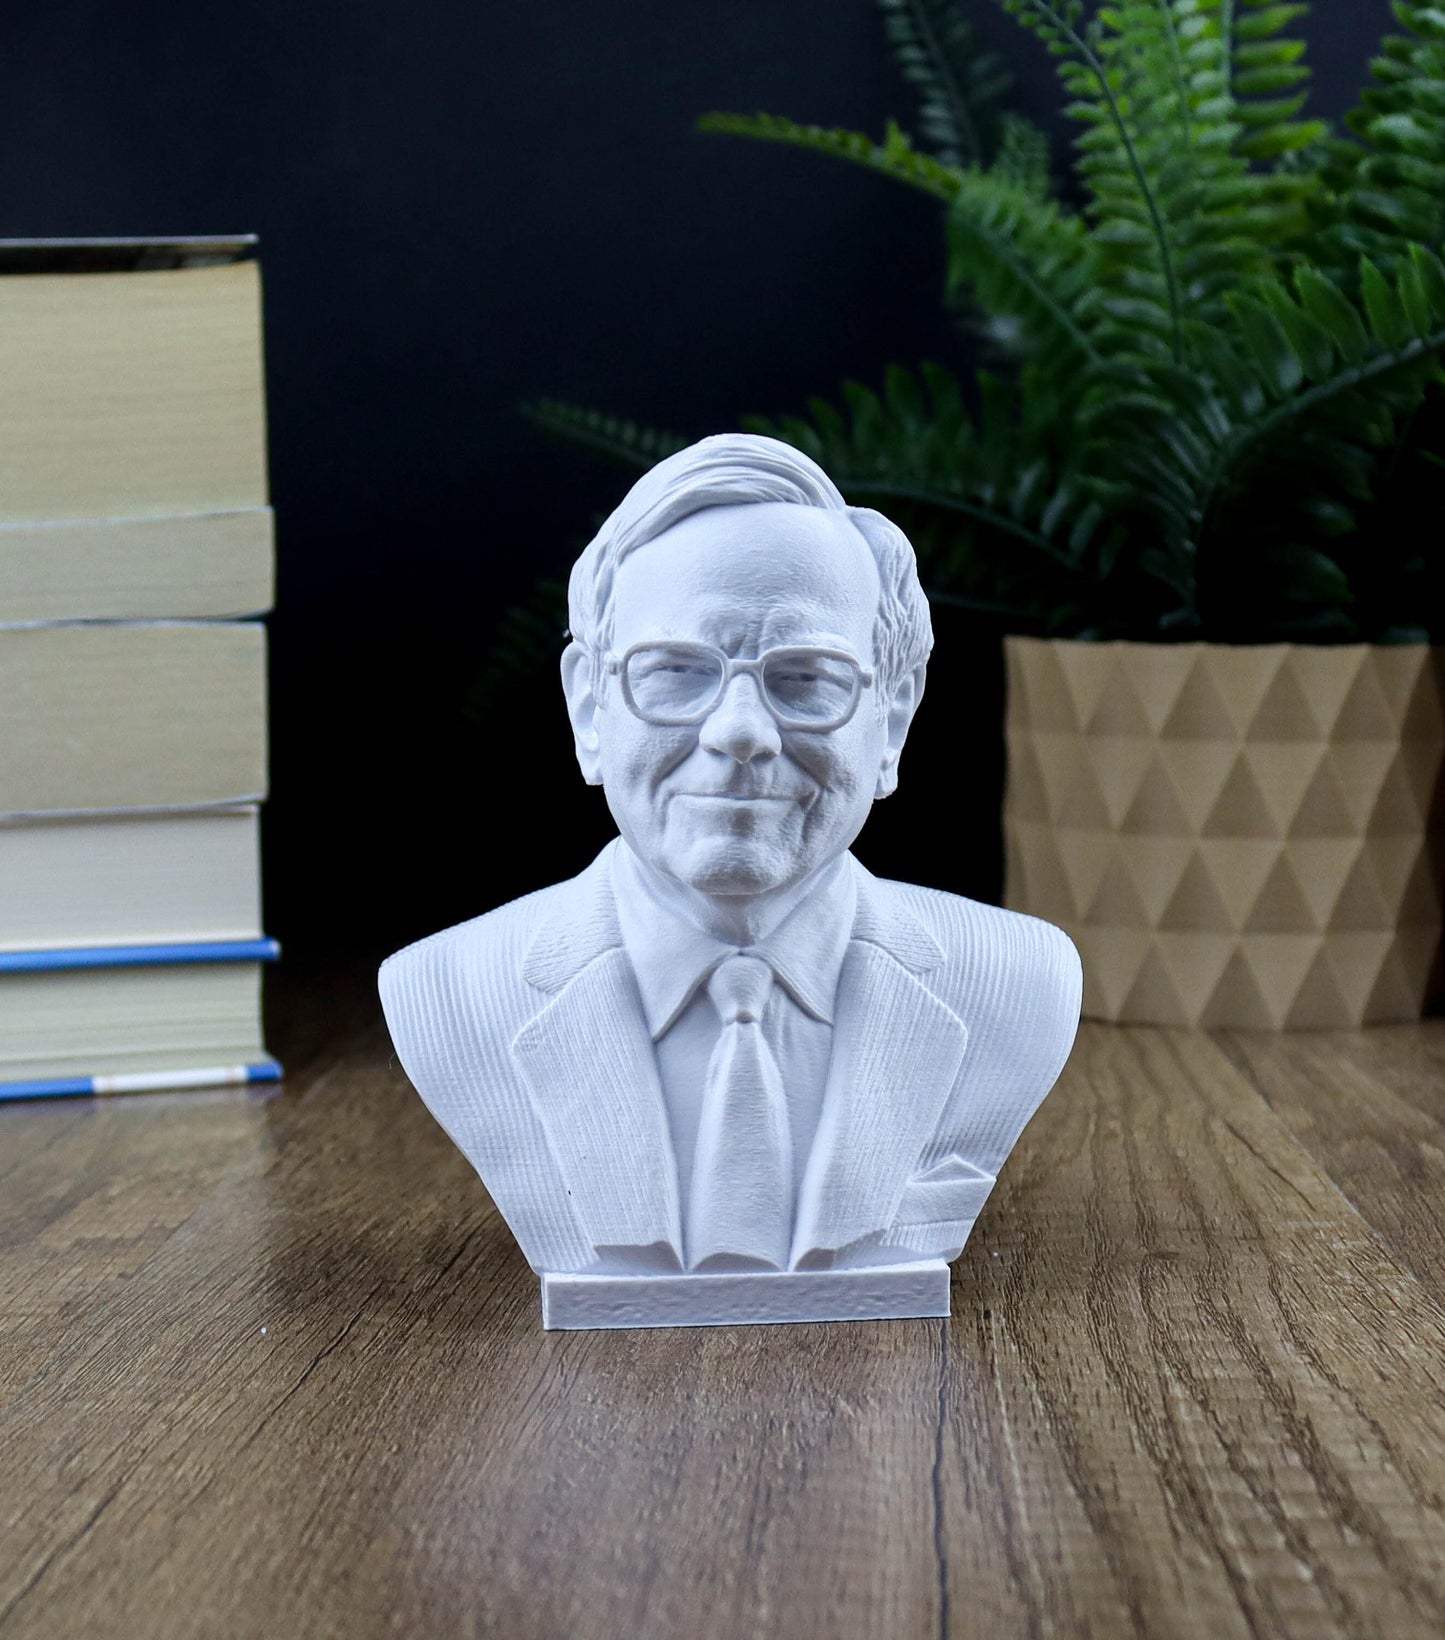 Warren Buffett Bust, Oracle of Omaha Statue, Gift for Friend Stock Investor